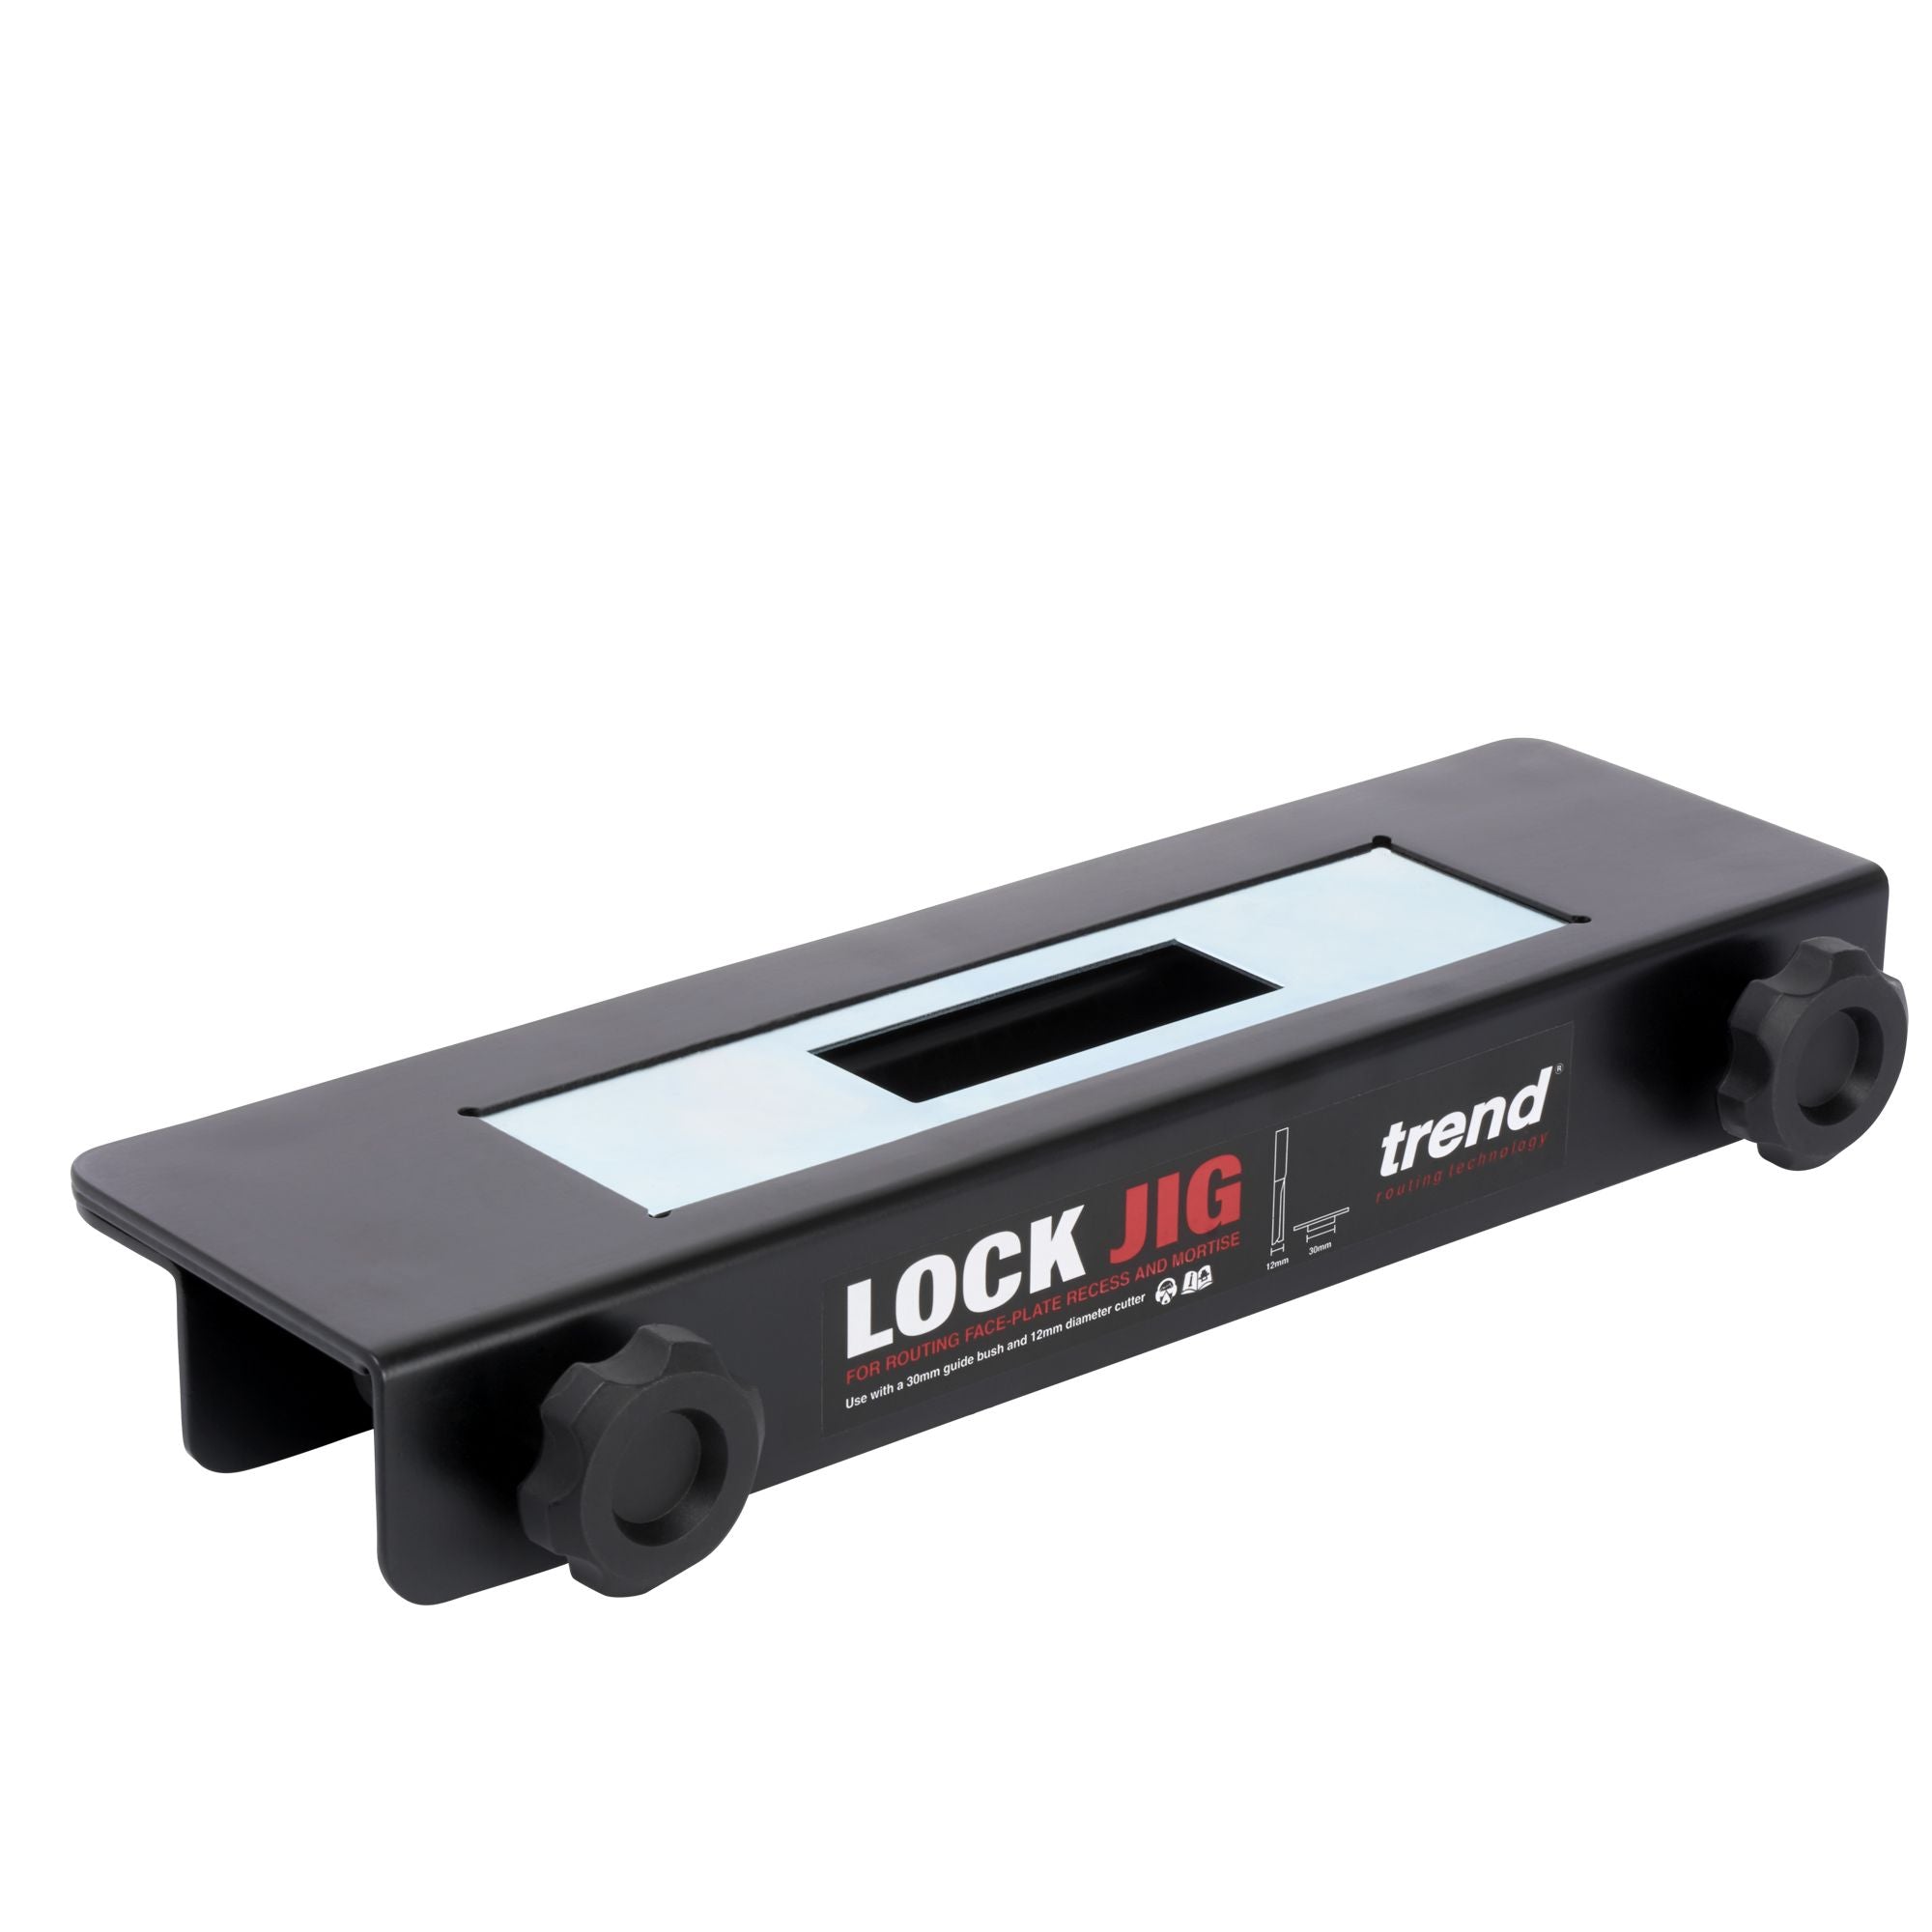 Trend Lock Jig with Templates LOCK/JIG